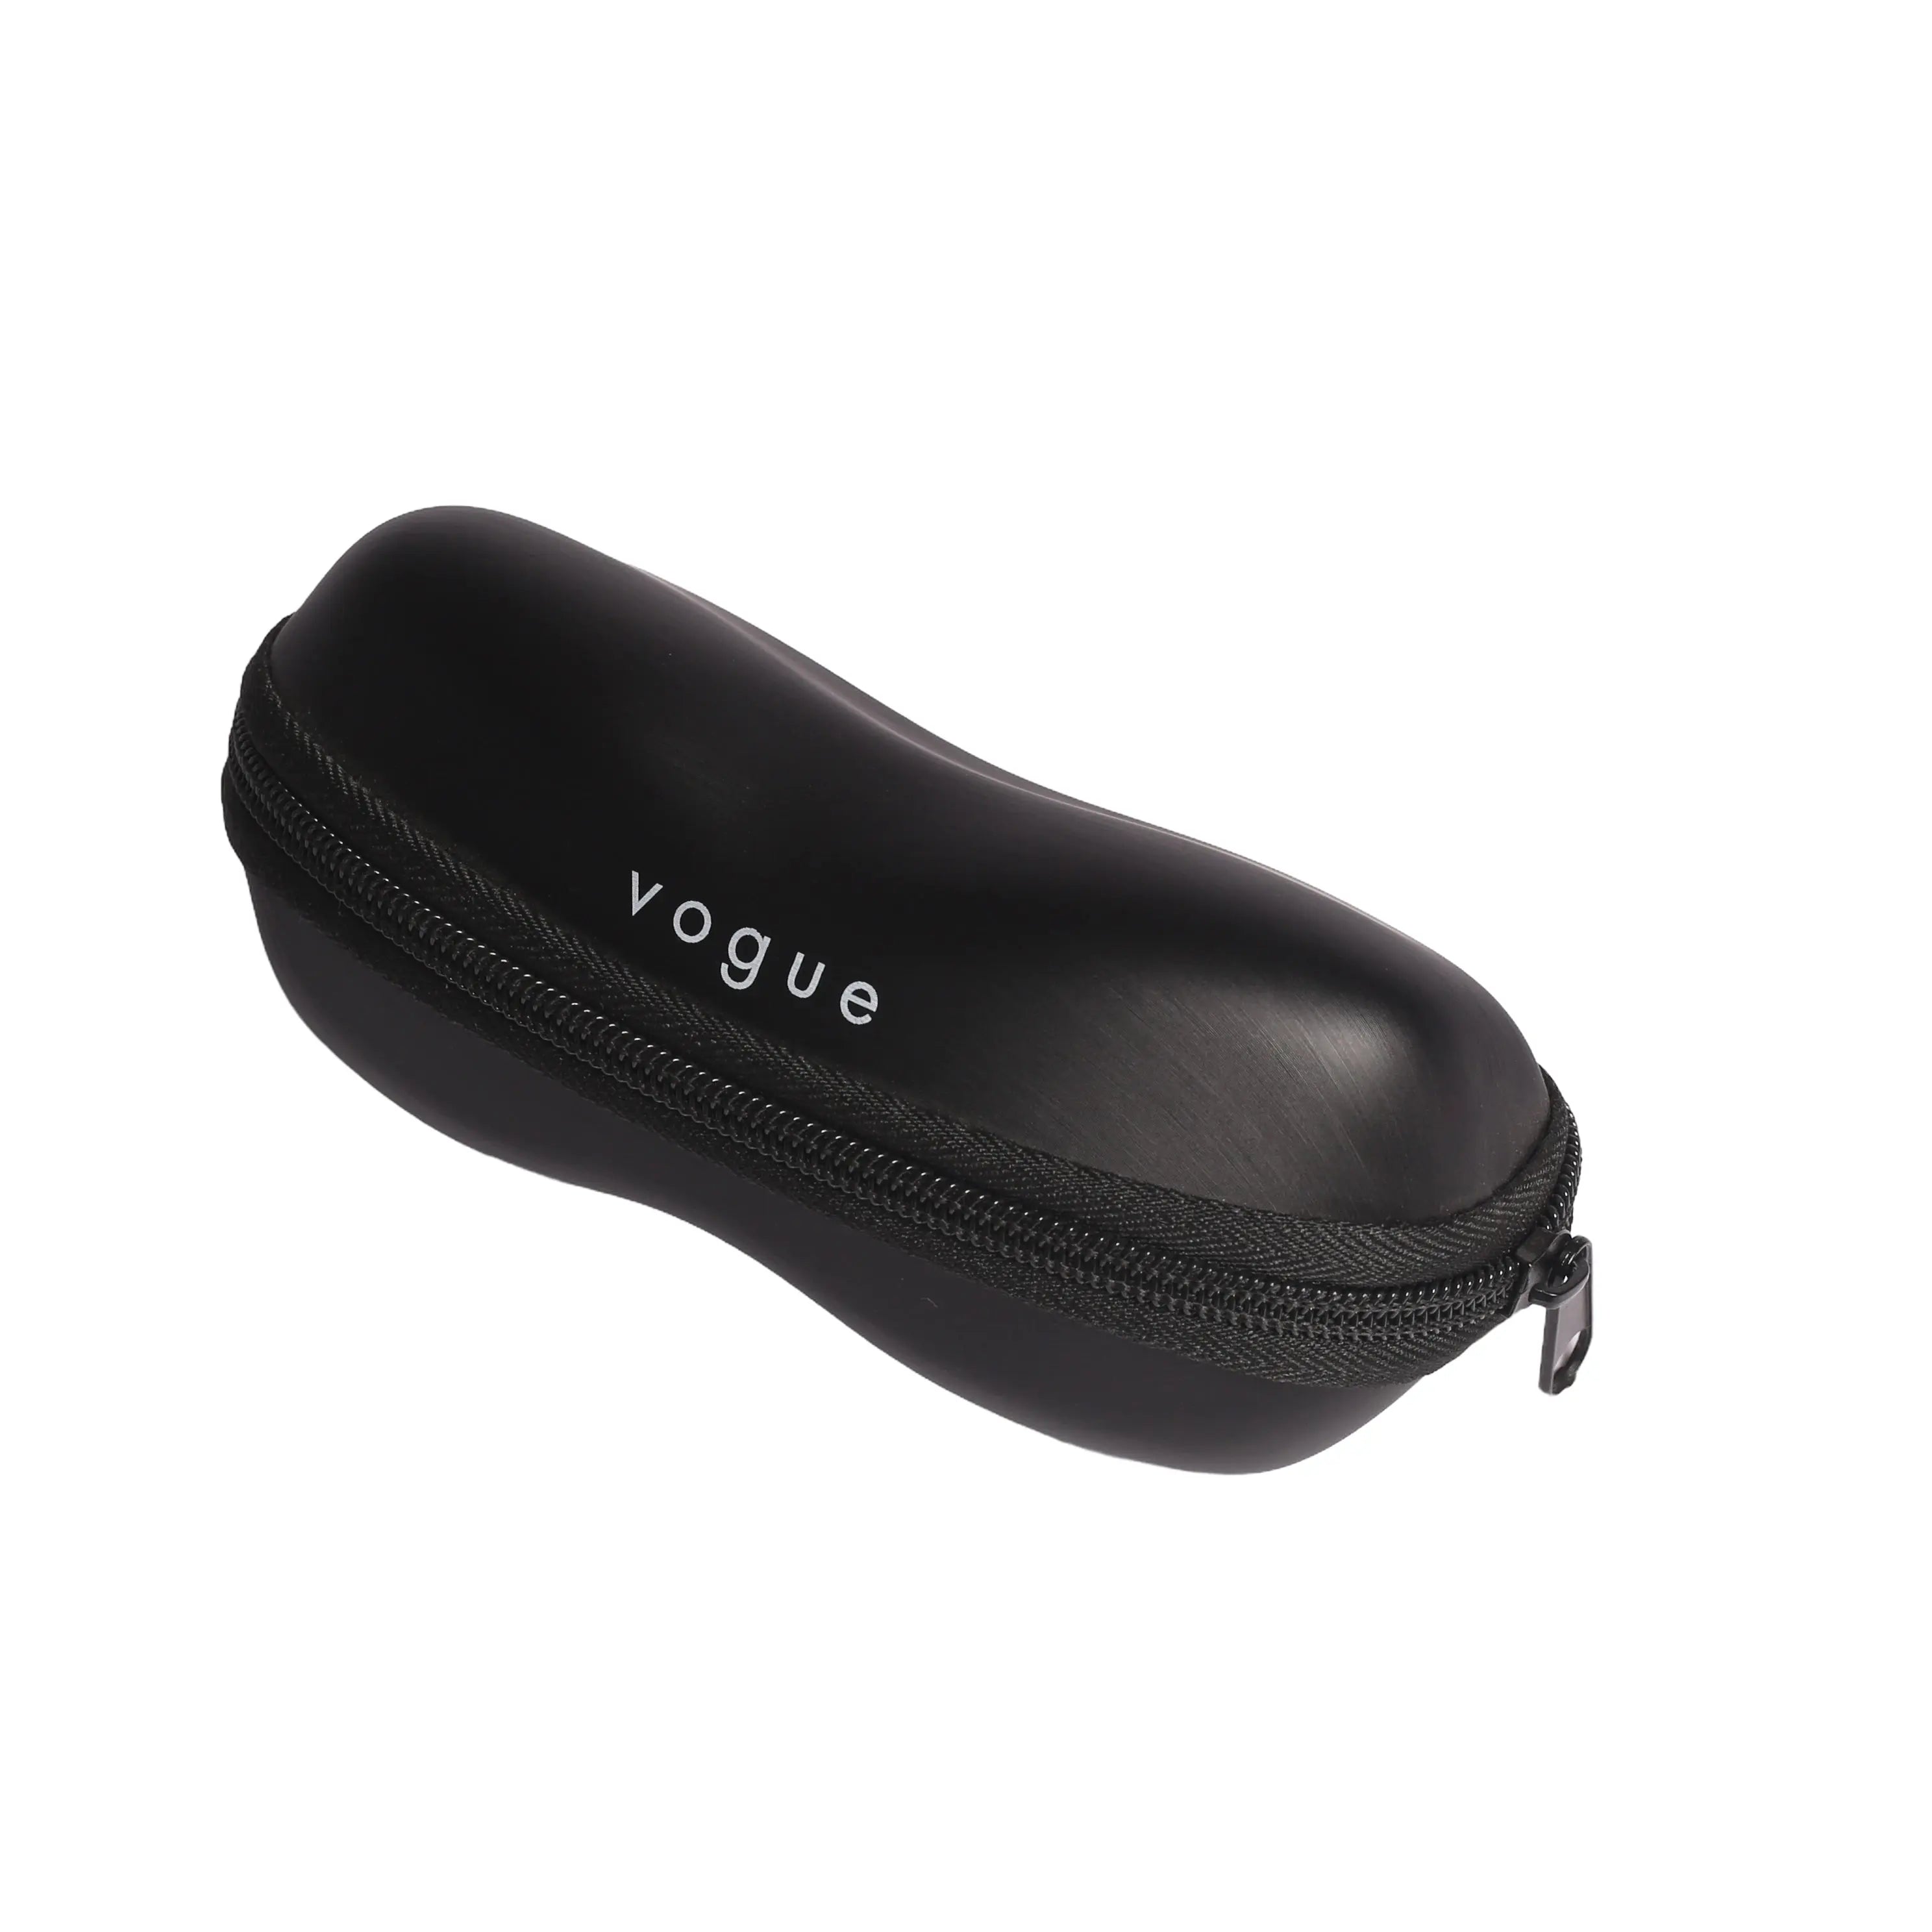 Vogue-VO5536S-52-W44/11 Sunglasses - Premium Sunglasses from Vogue - Just Rs. 3590! Shop now at Laxmi Opticians